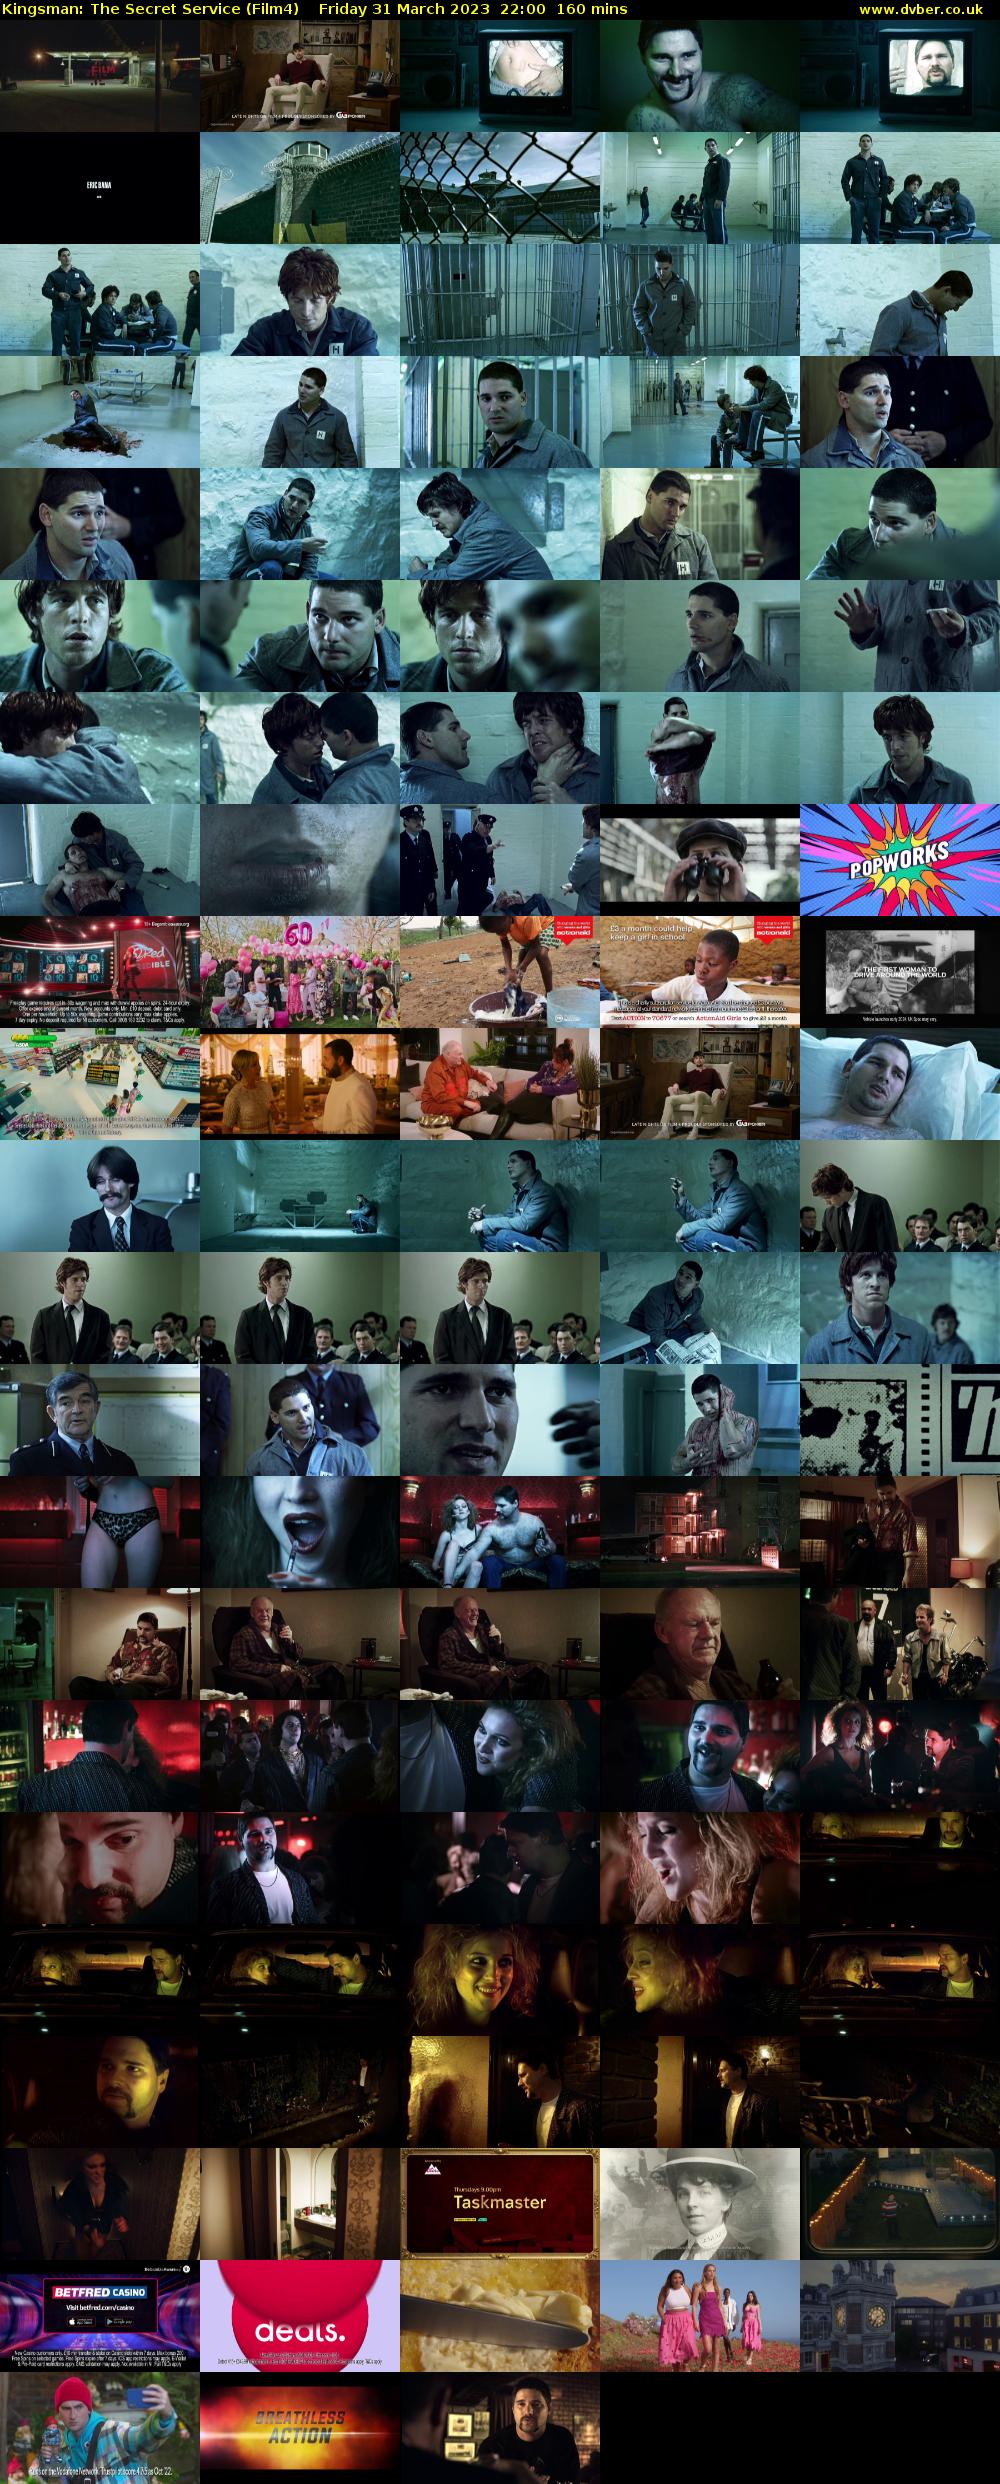 Kingsman: The Secret Service (Film4) Friday 31 March 2023 22:00 - 00:40